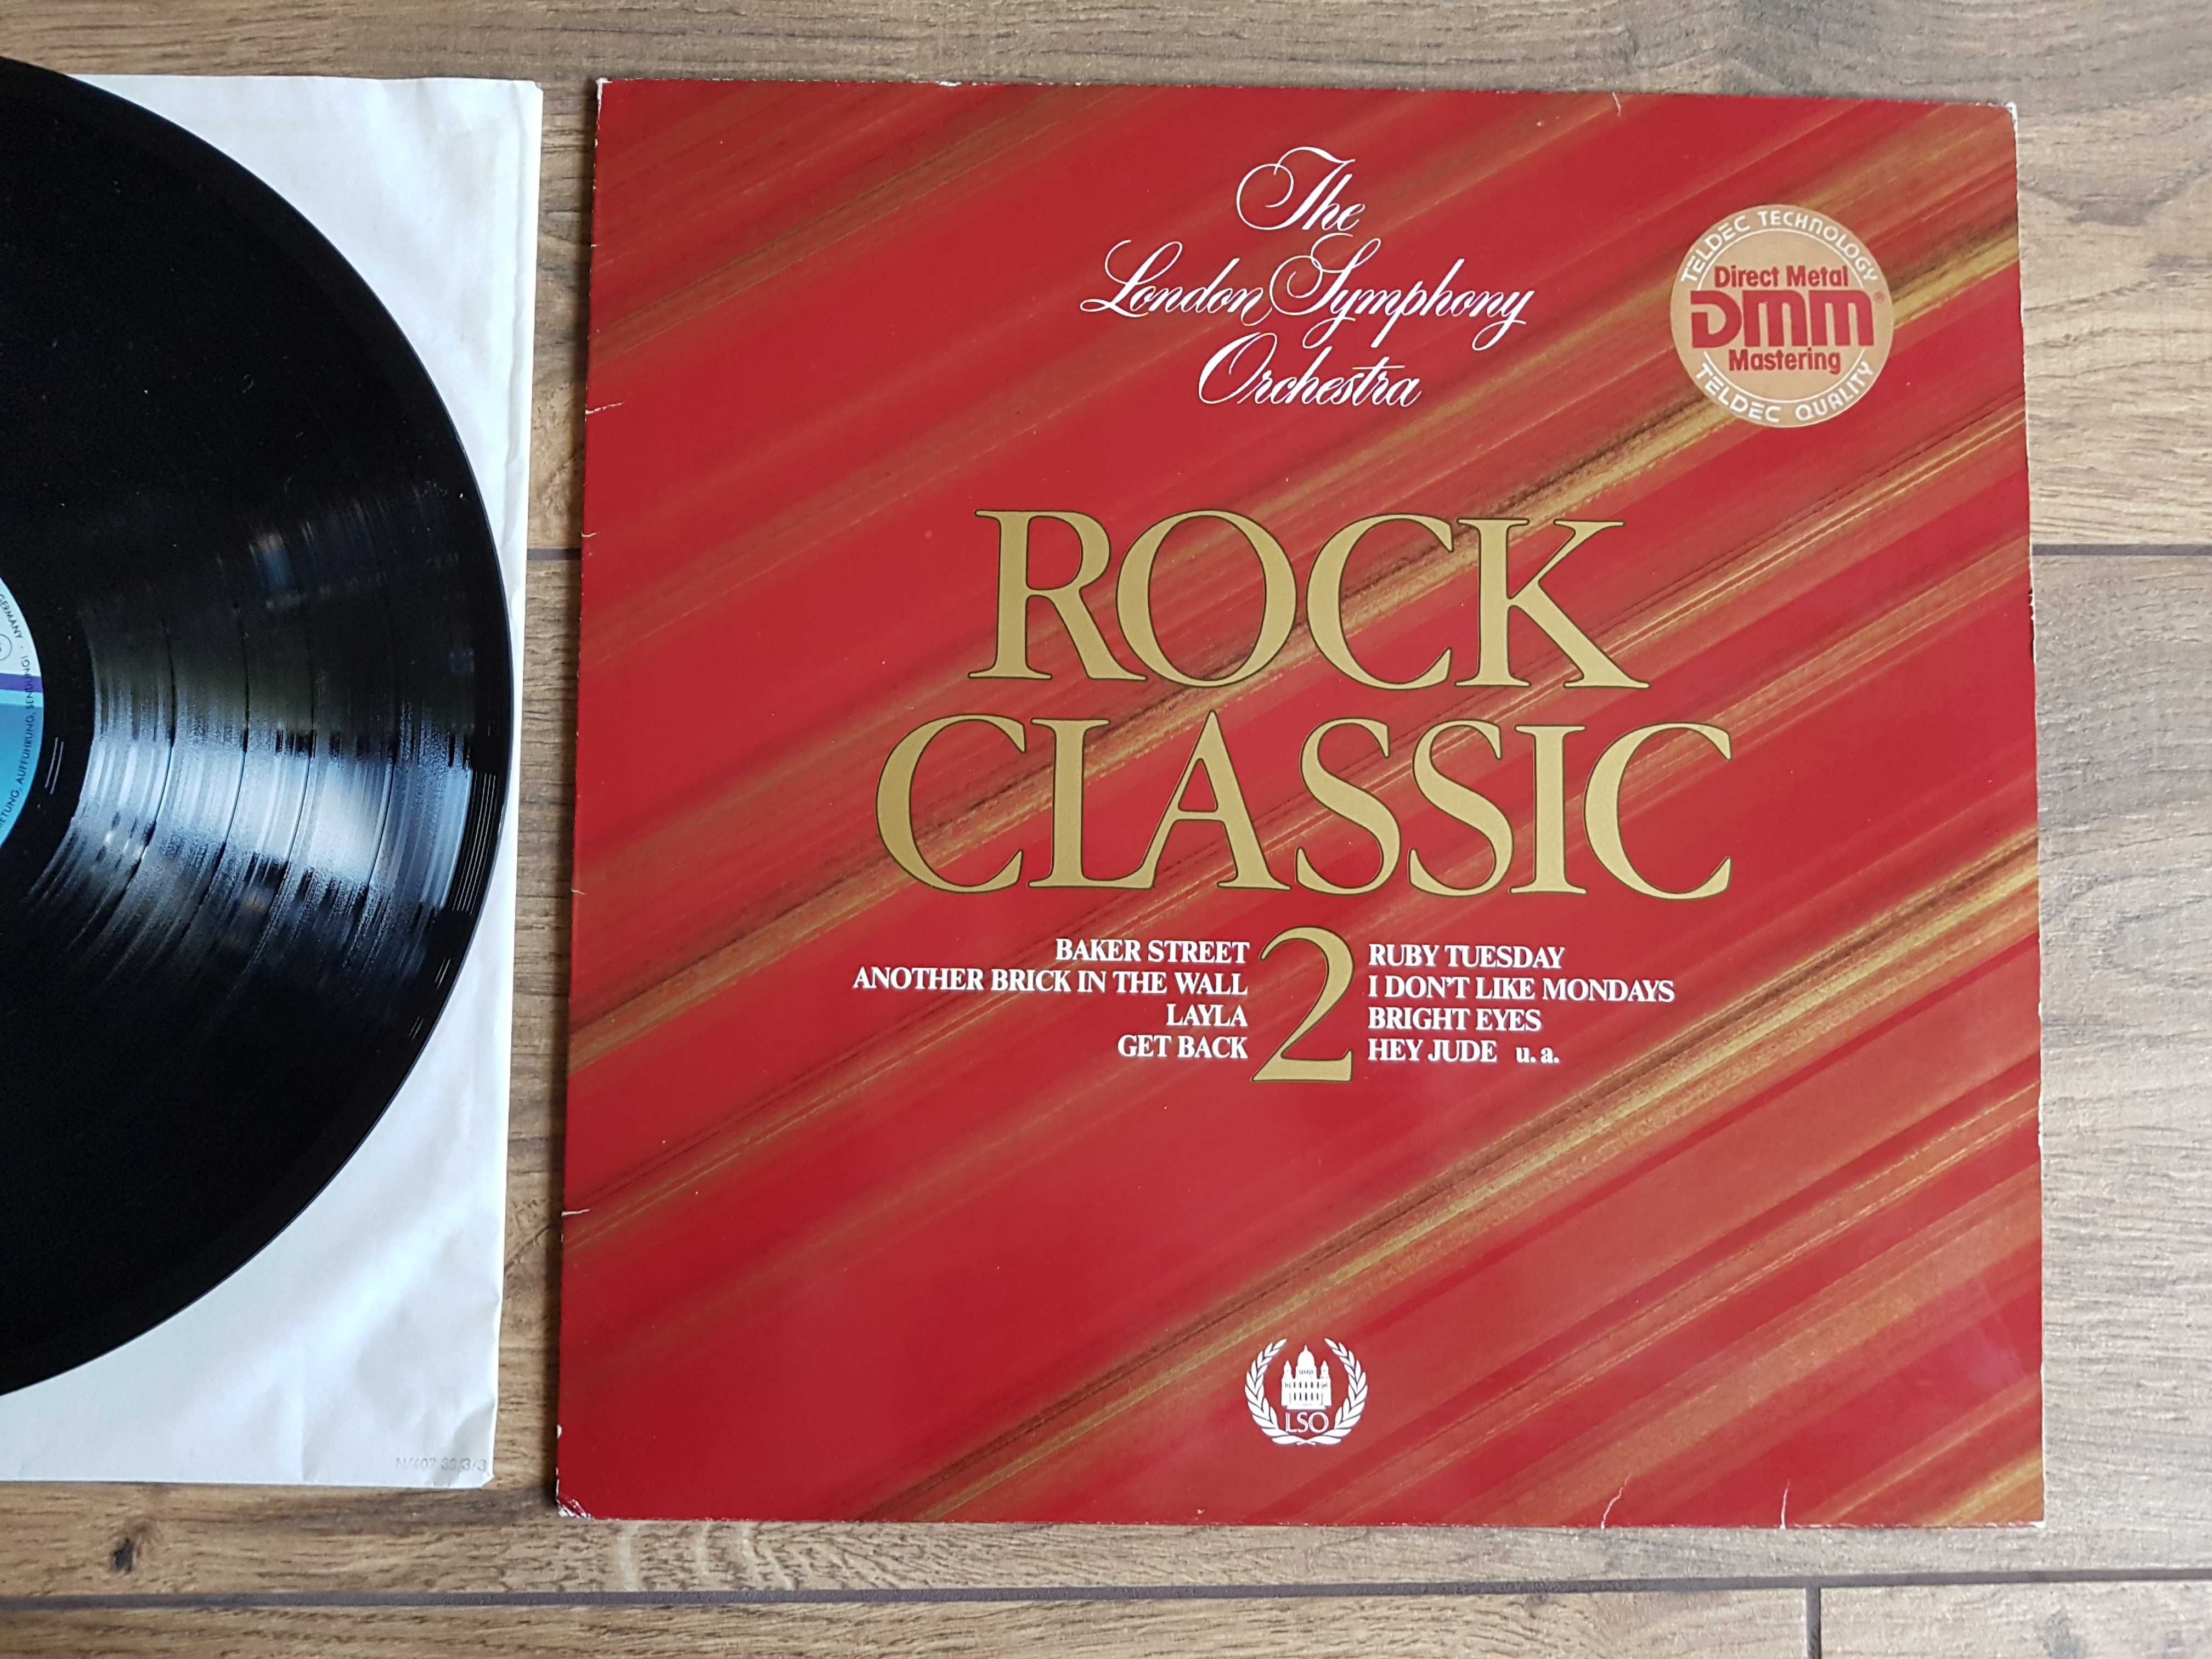 LP, vinyl: The London Symphony Orchestra "Rock Classic 2"